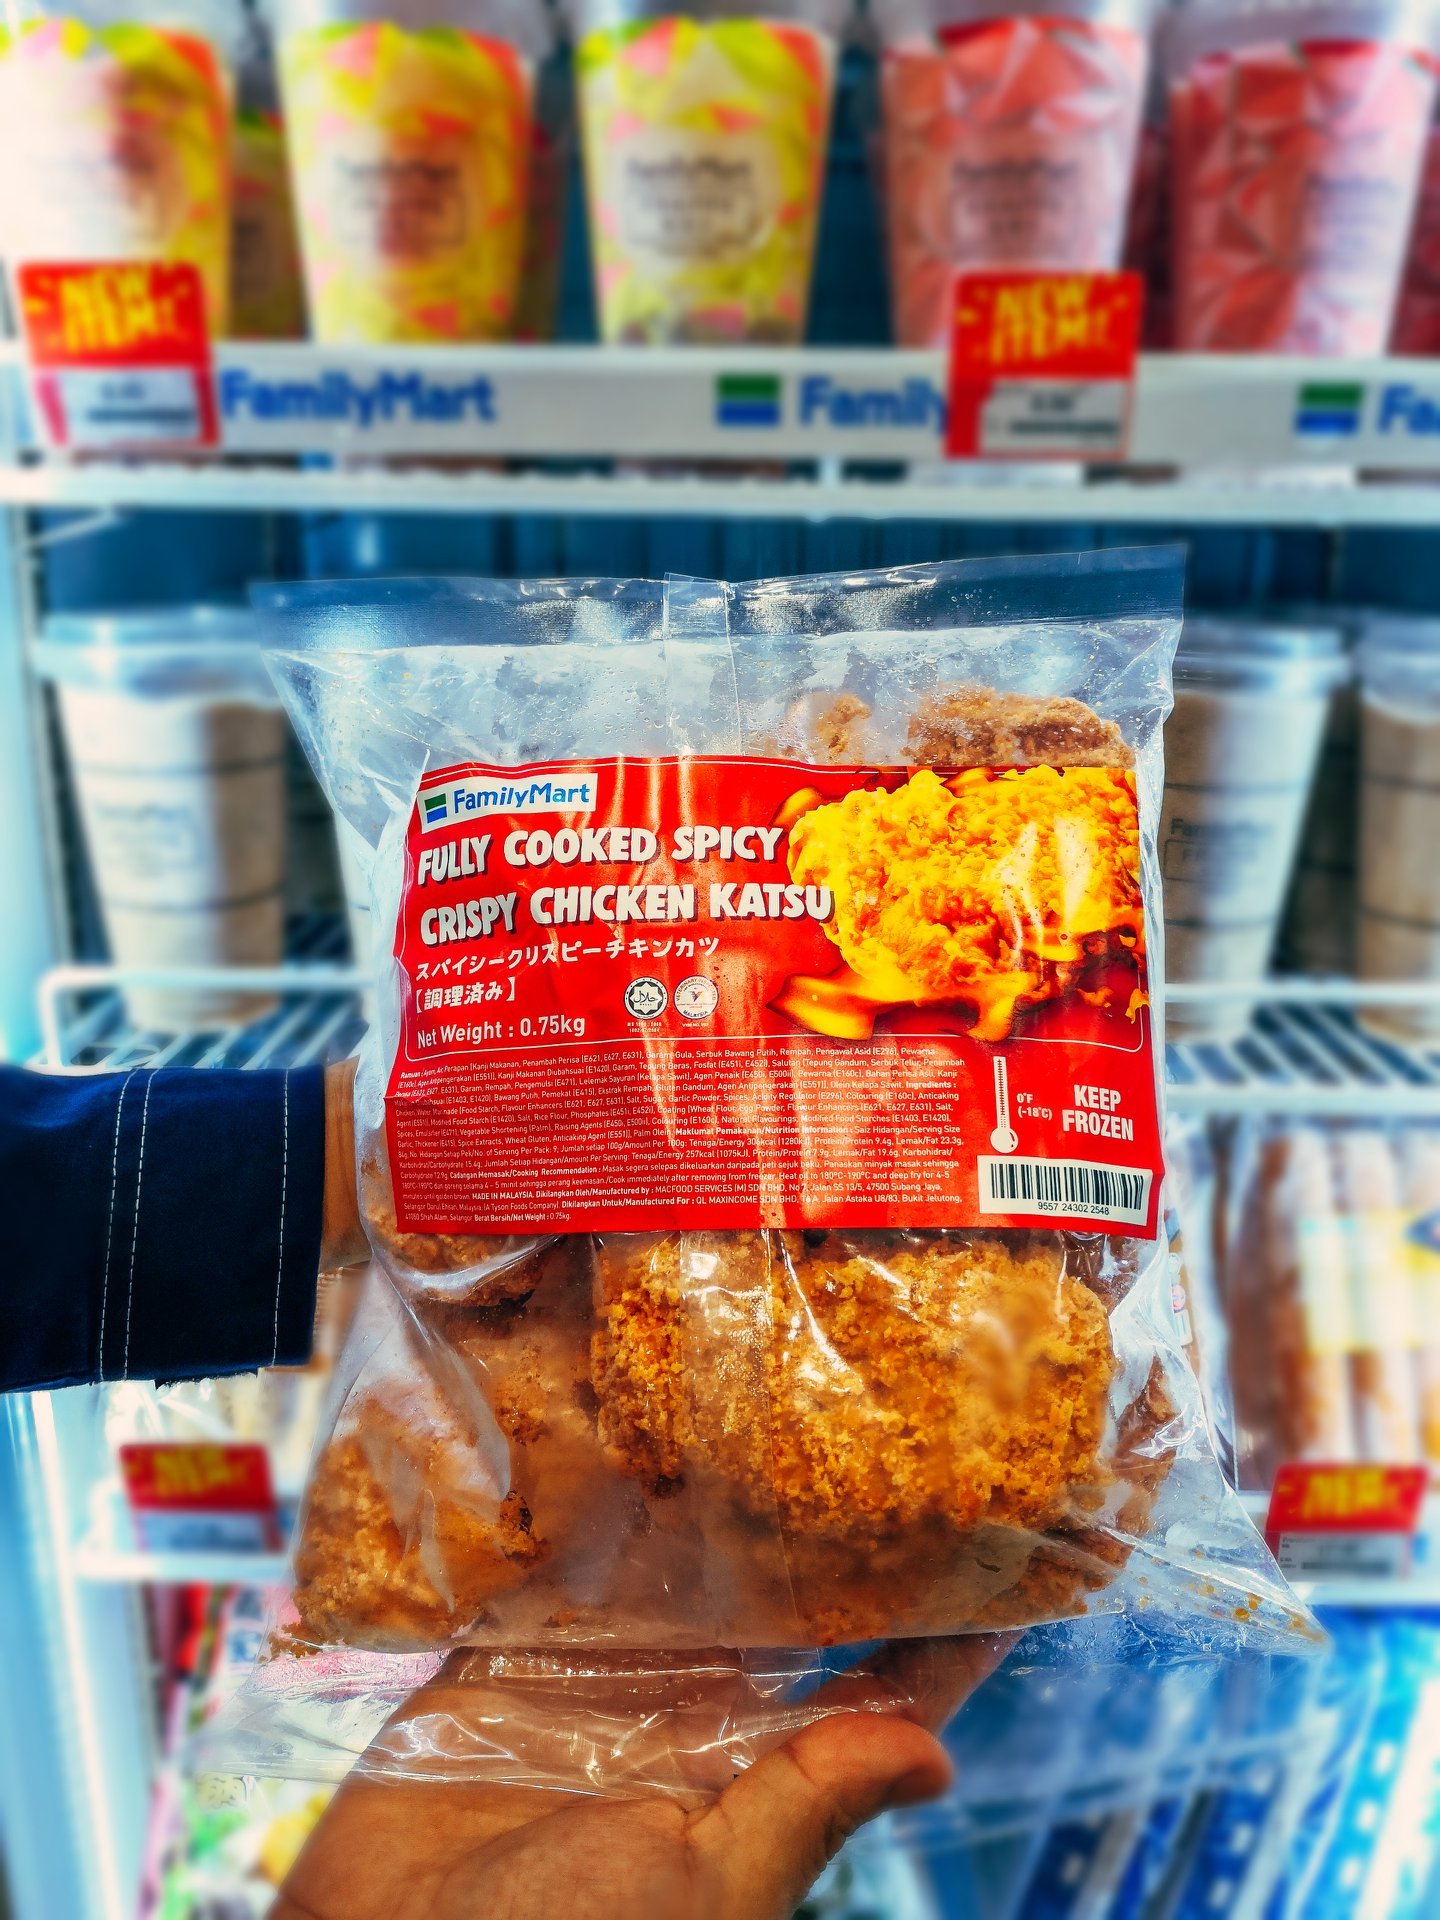 Family Mart 推出全新冷冻食品!奶酪香肠、炸鸡排都有!买回家自己炸，5分钟搞定! - LEESHARING